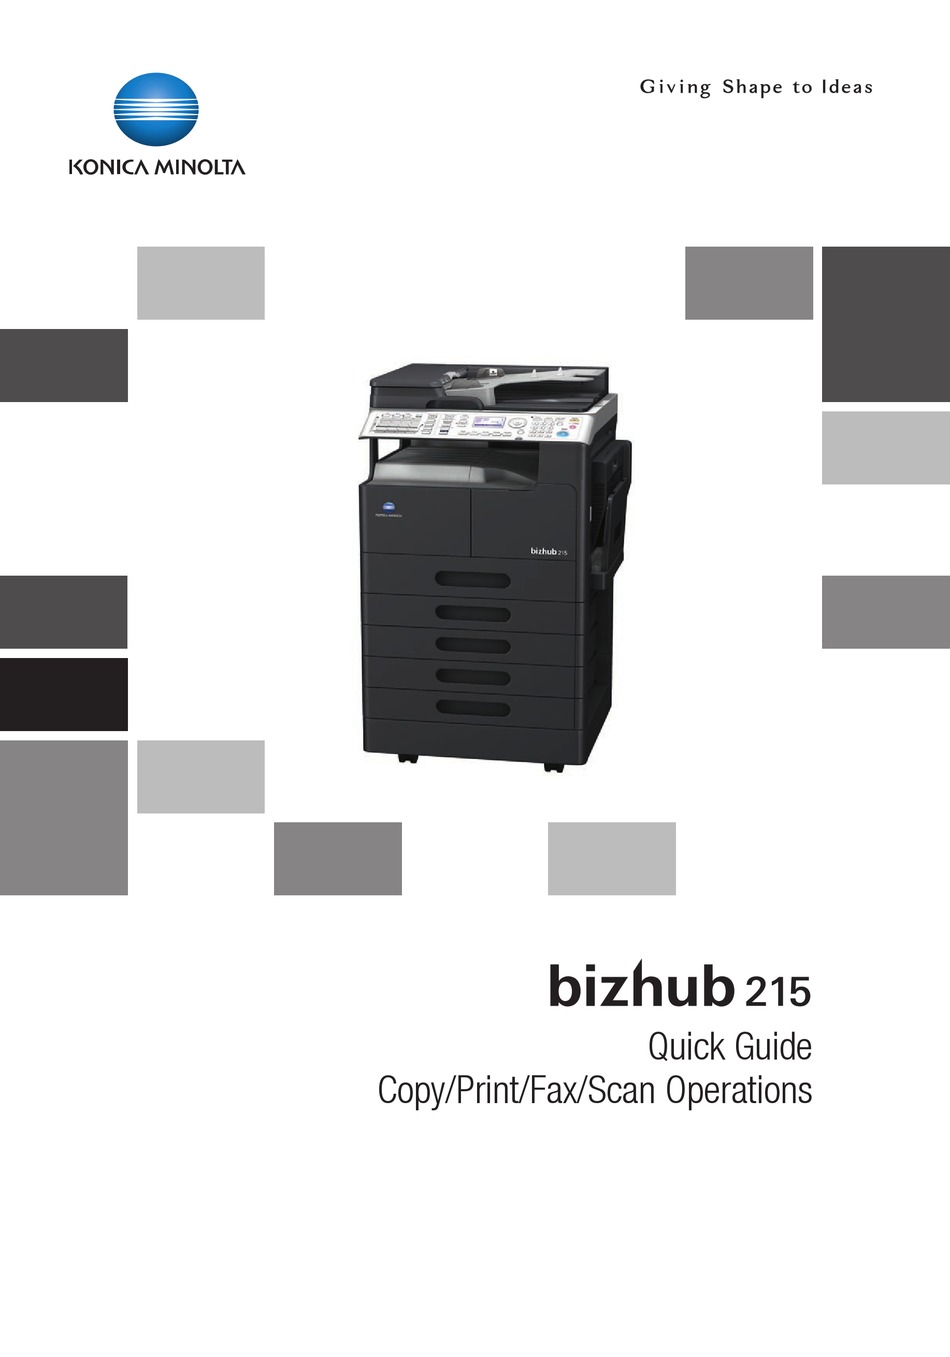 Bizhub 211 Printer Driver - hollywoodrecords1607